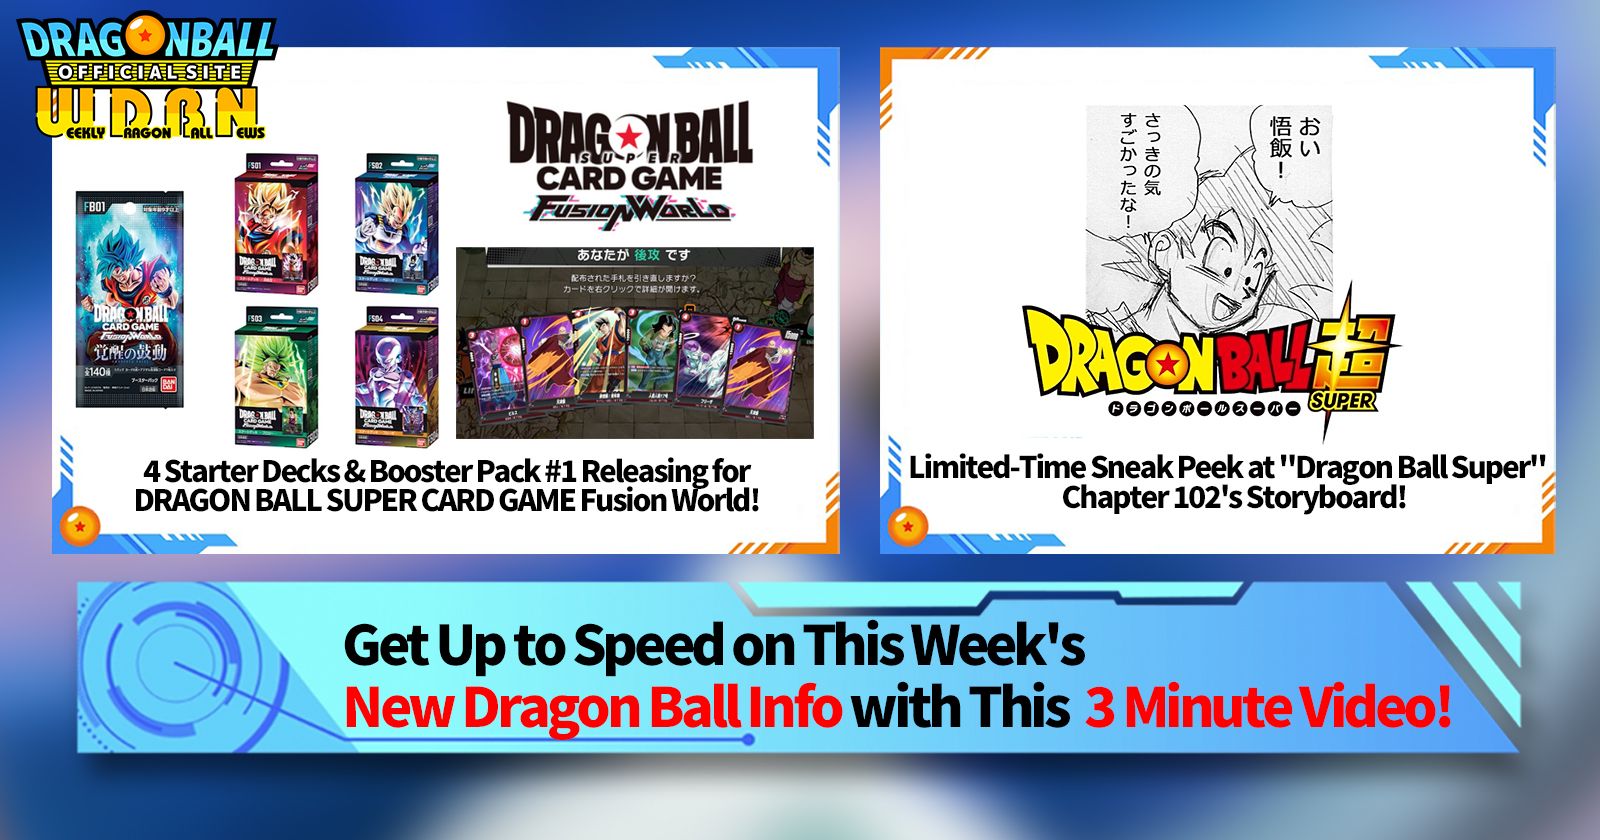 [February 12th] Weekly Dragon Ball News Broadcast!